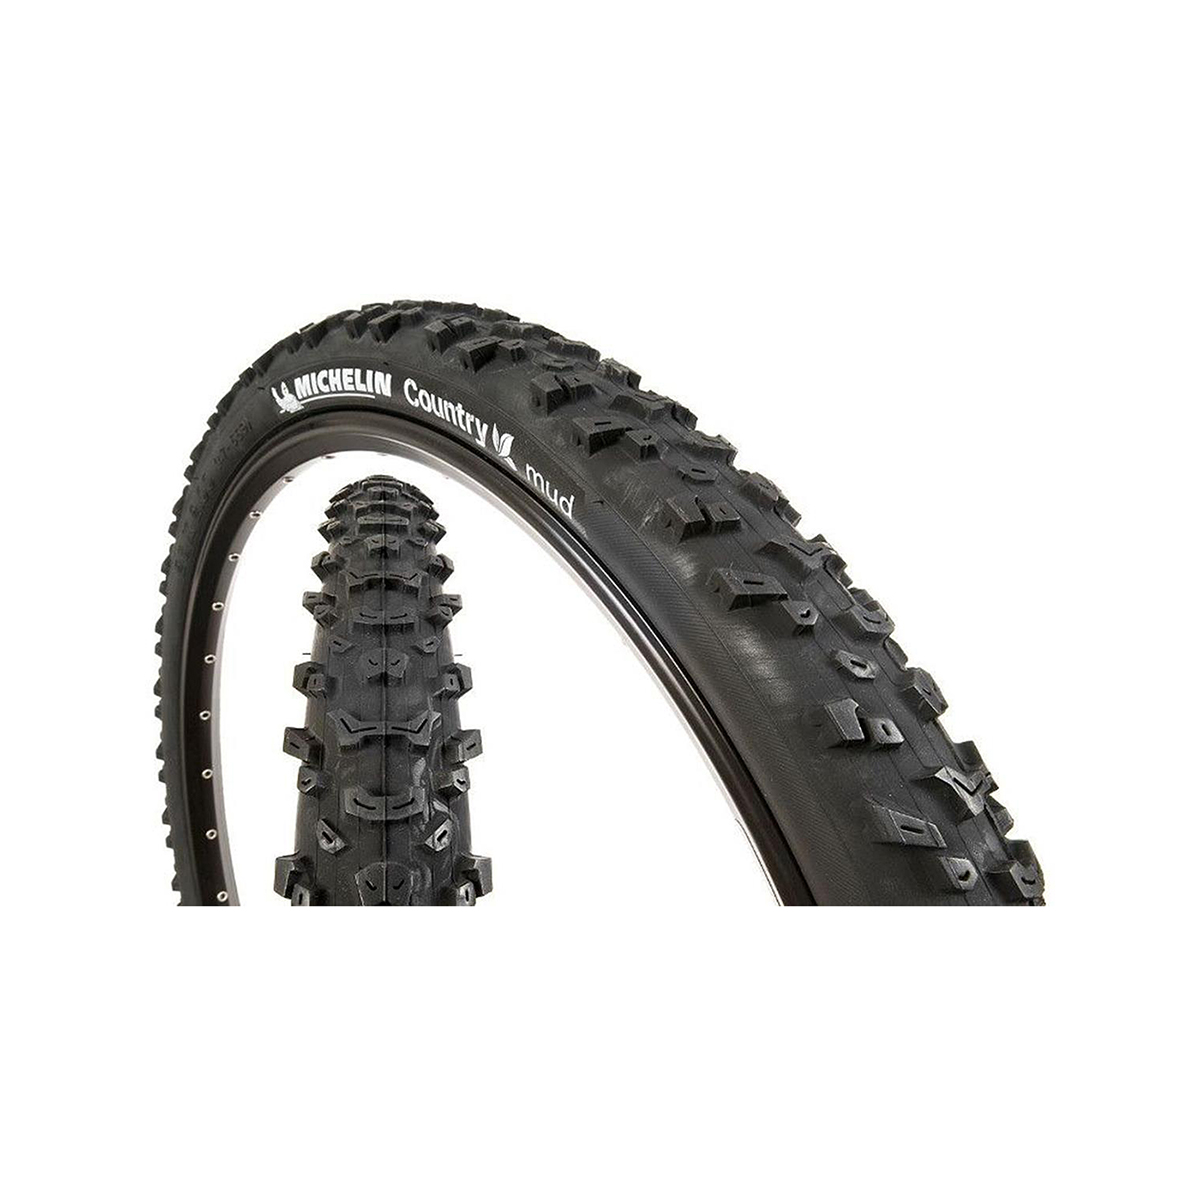 Guma 26X2,00 Michelin Country Mud | BikerShop